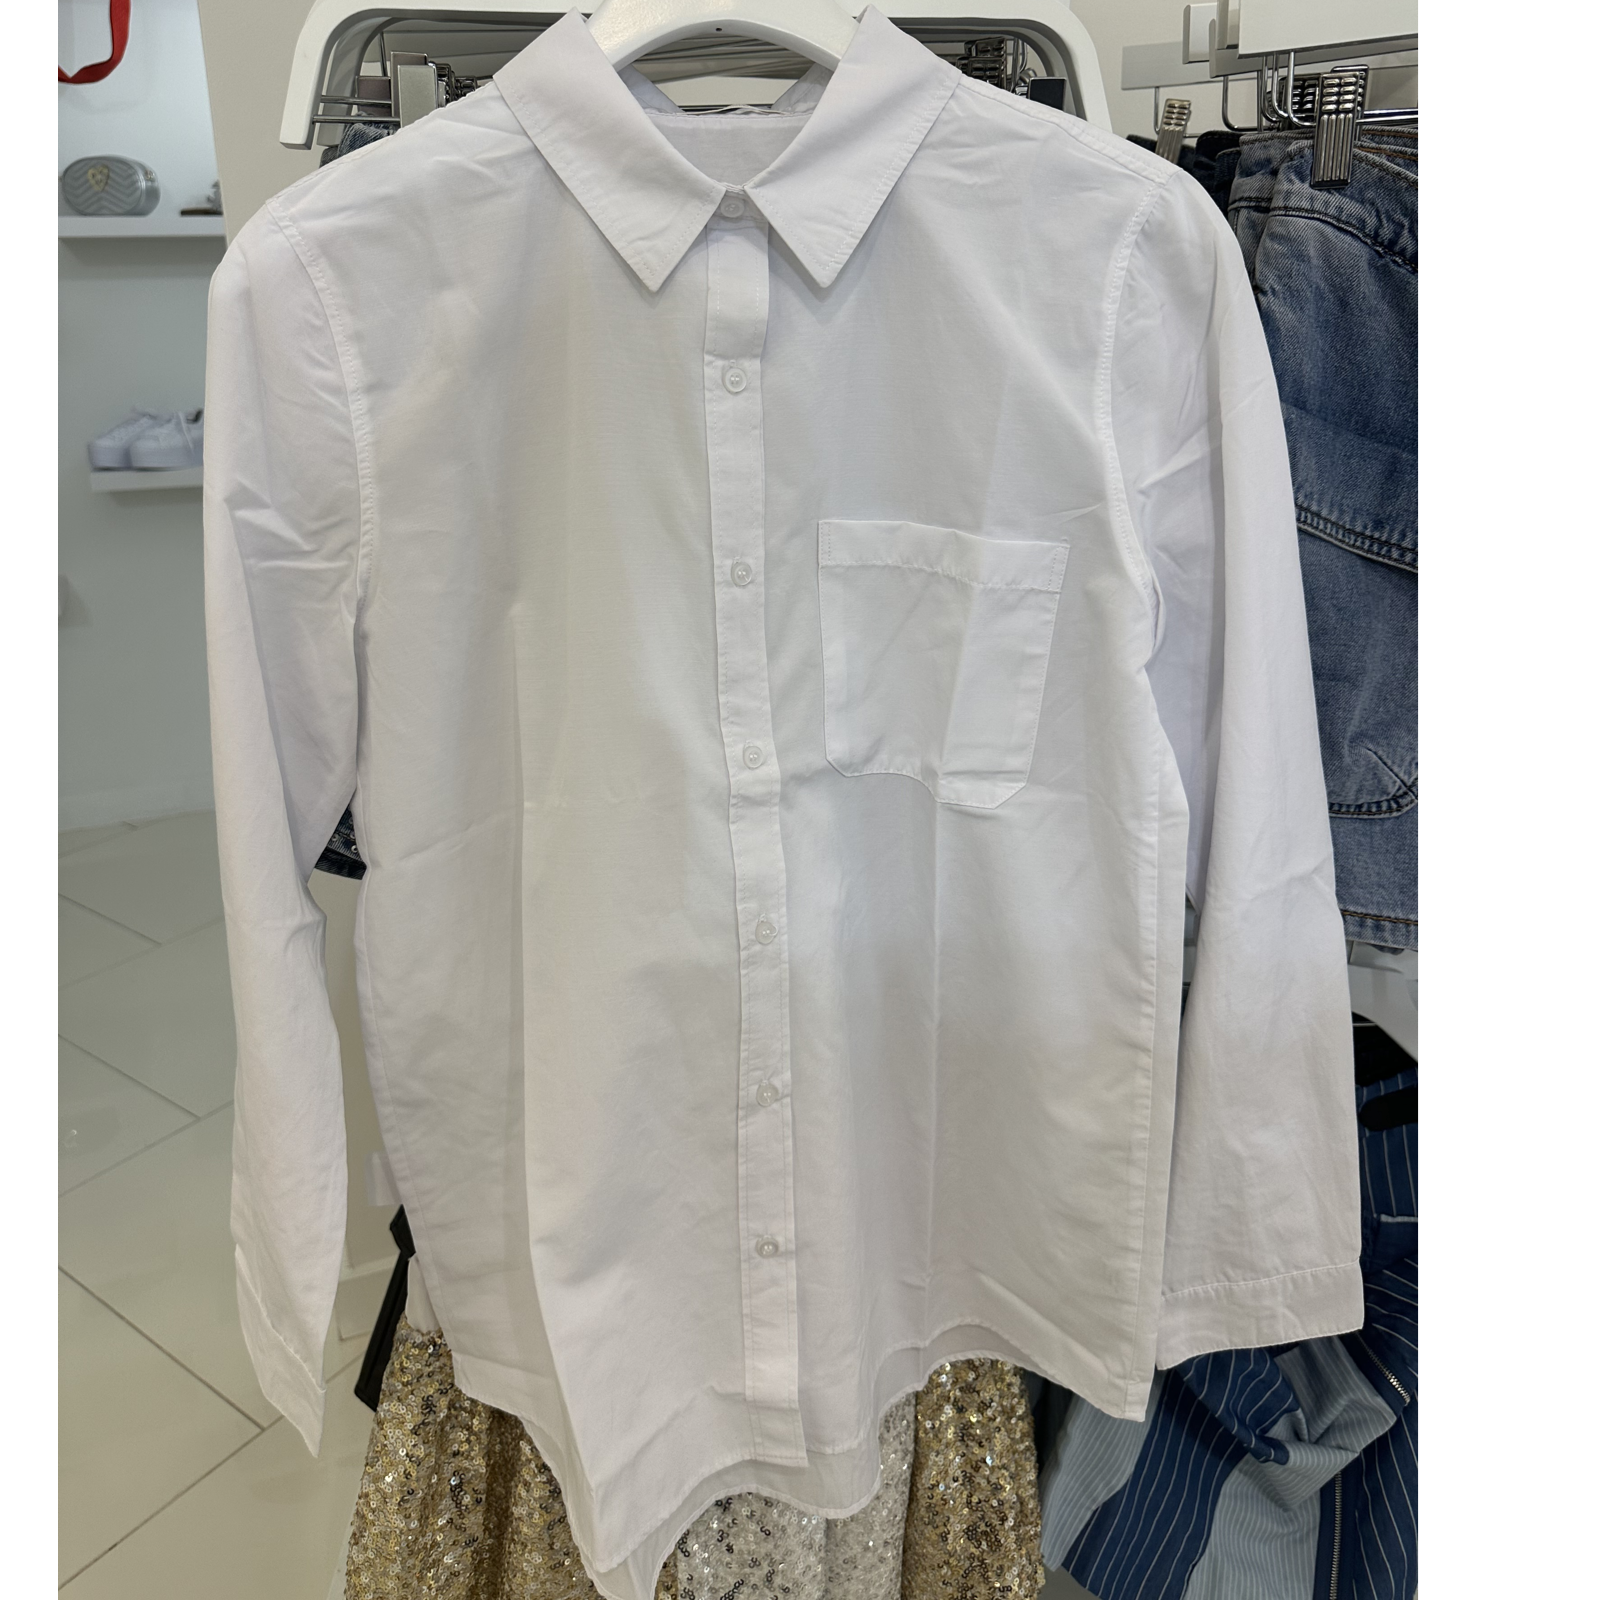 Off white basic blouse